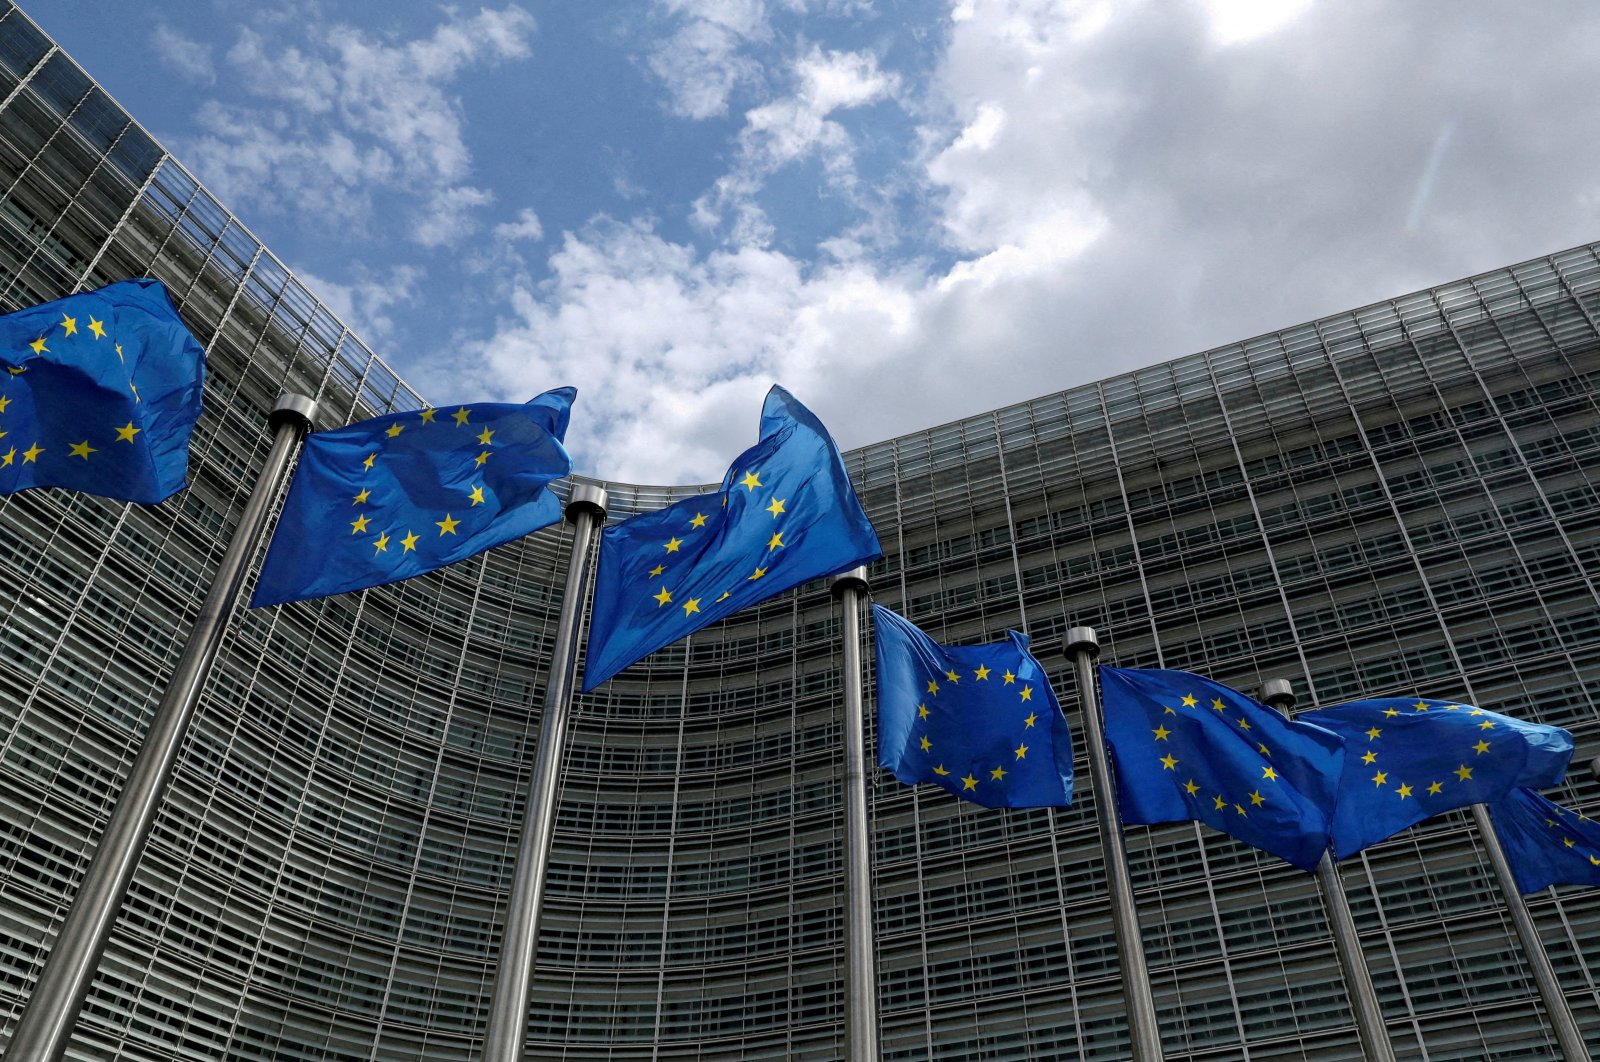 European Union flags flutter outside the European Commission headquarters in Brussels, Belgium, June 5, 2020. (Reuters Photo)